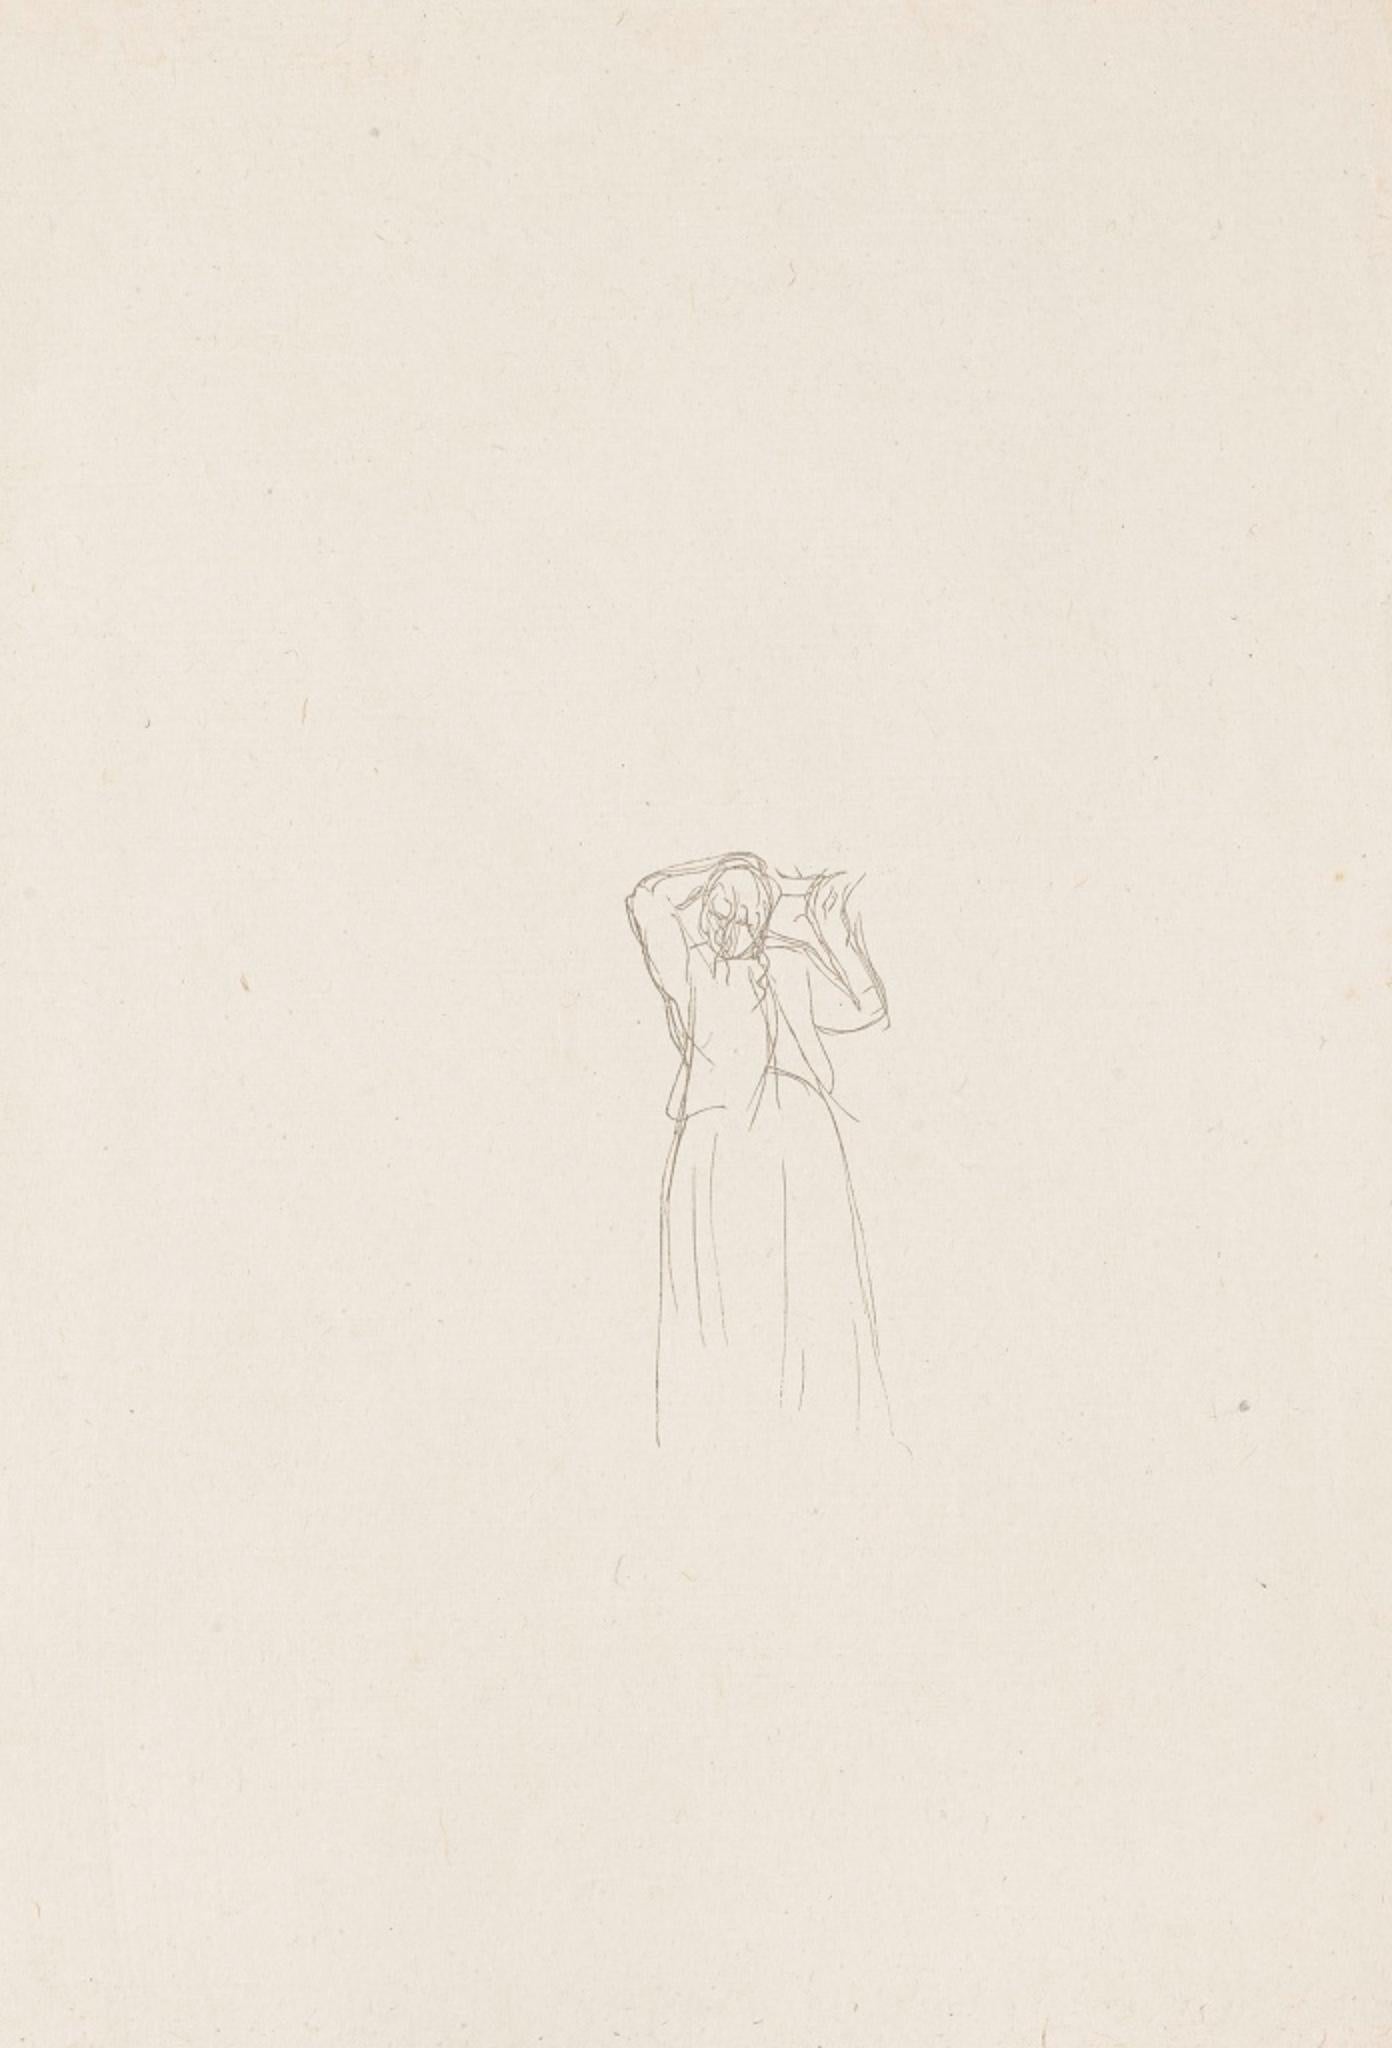 Woman Silhouette - Original Pencil Drawing - 1900s